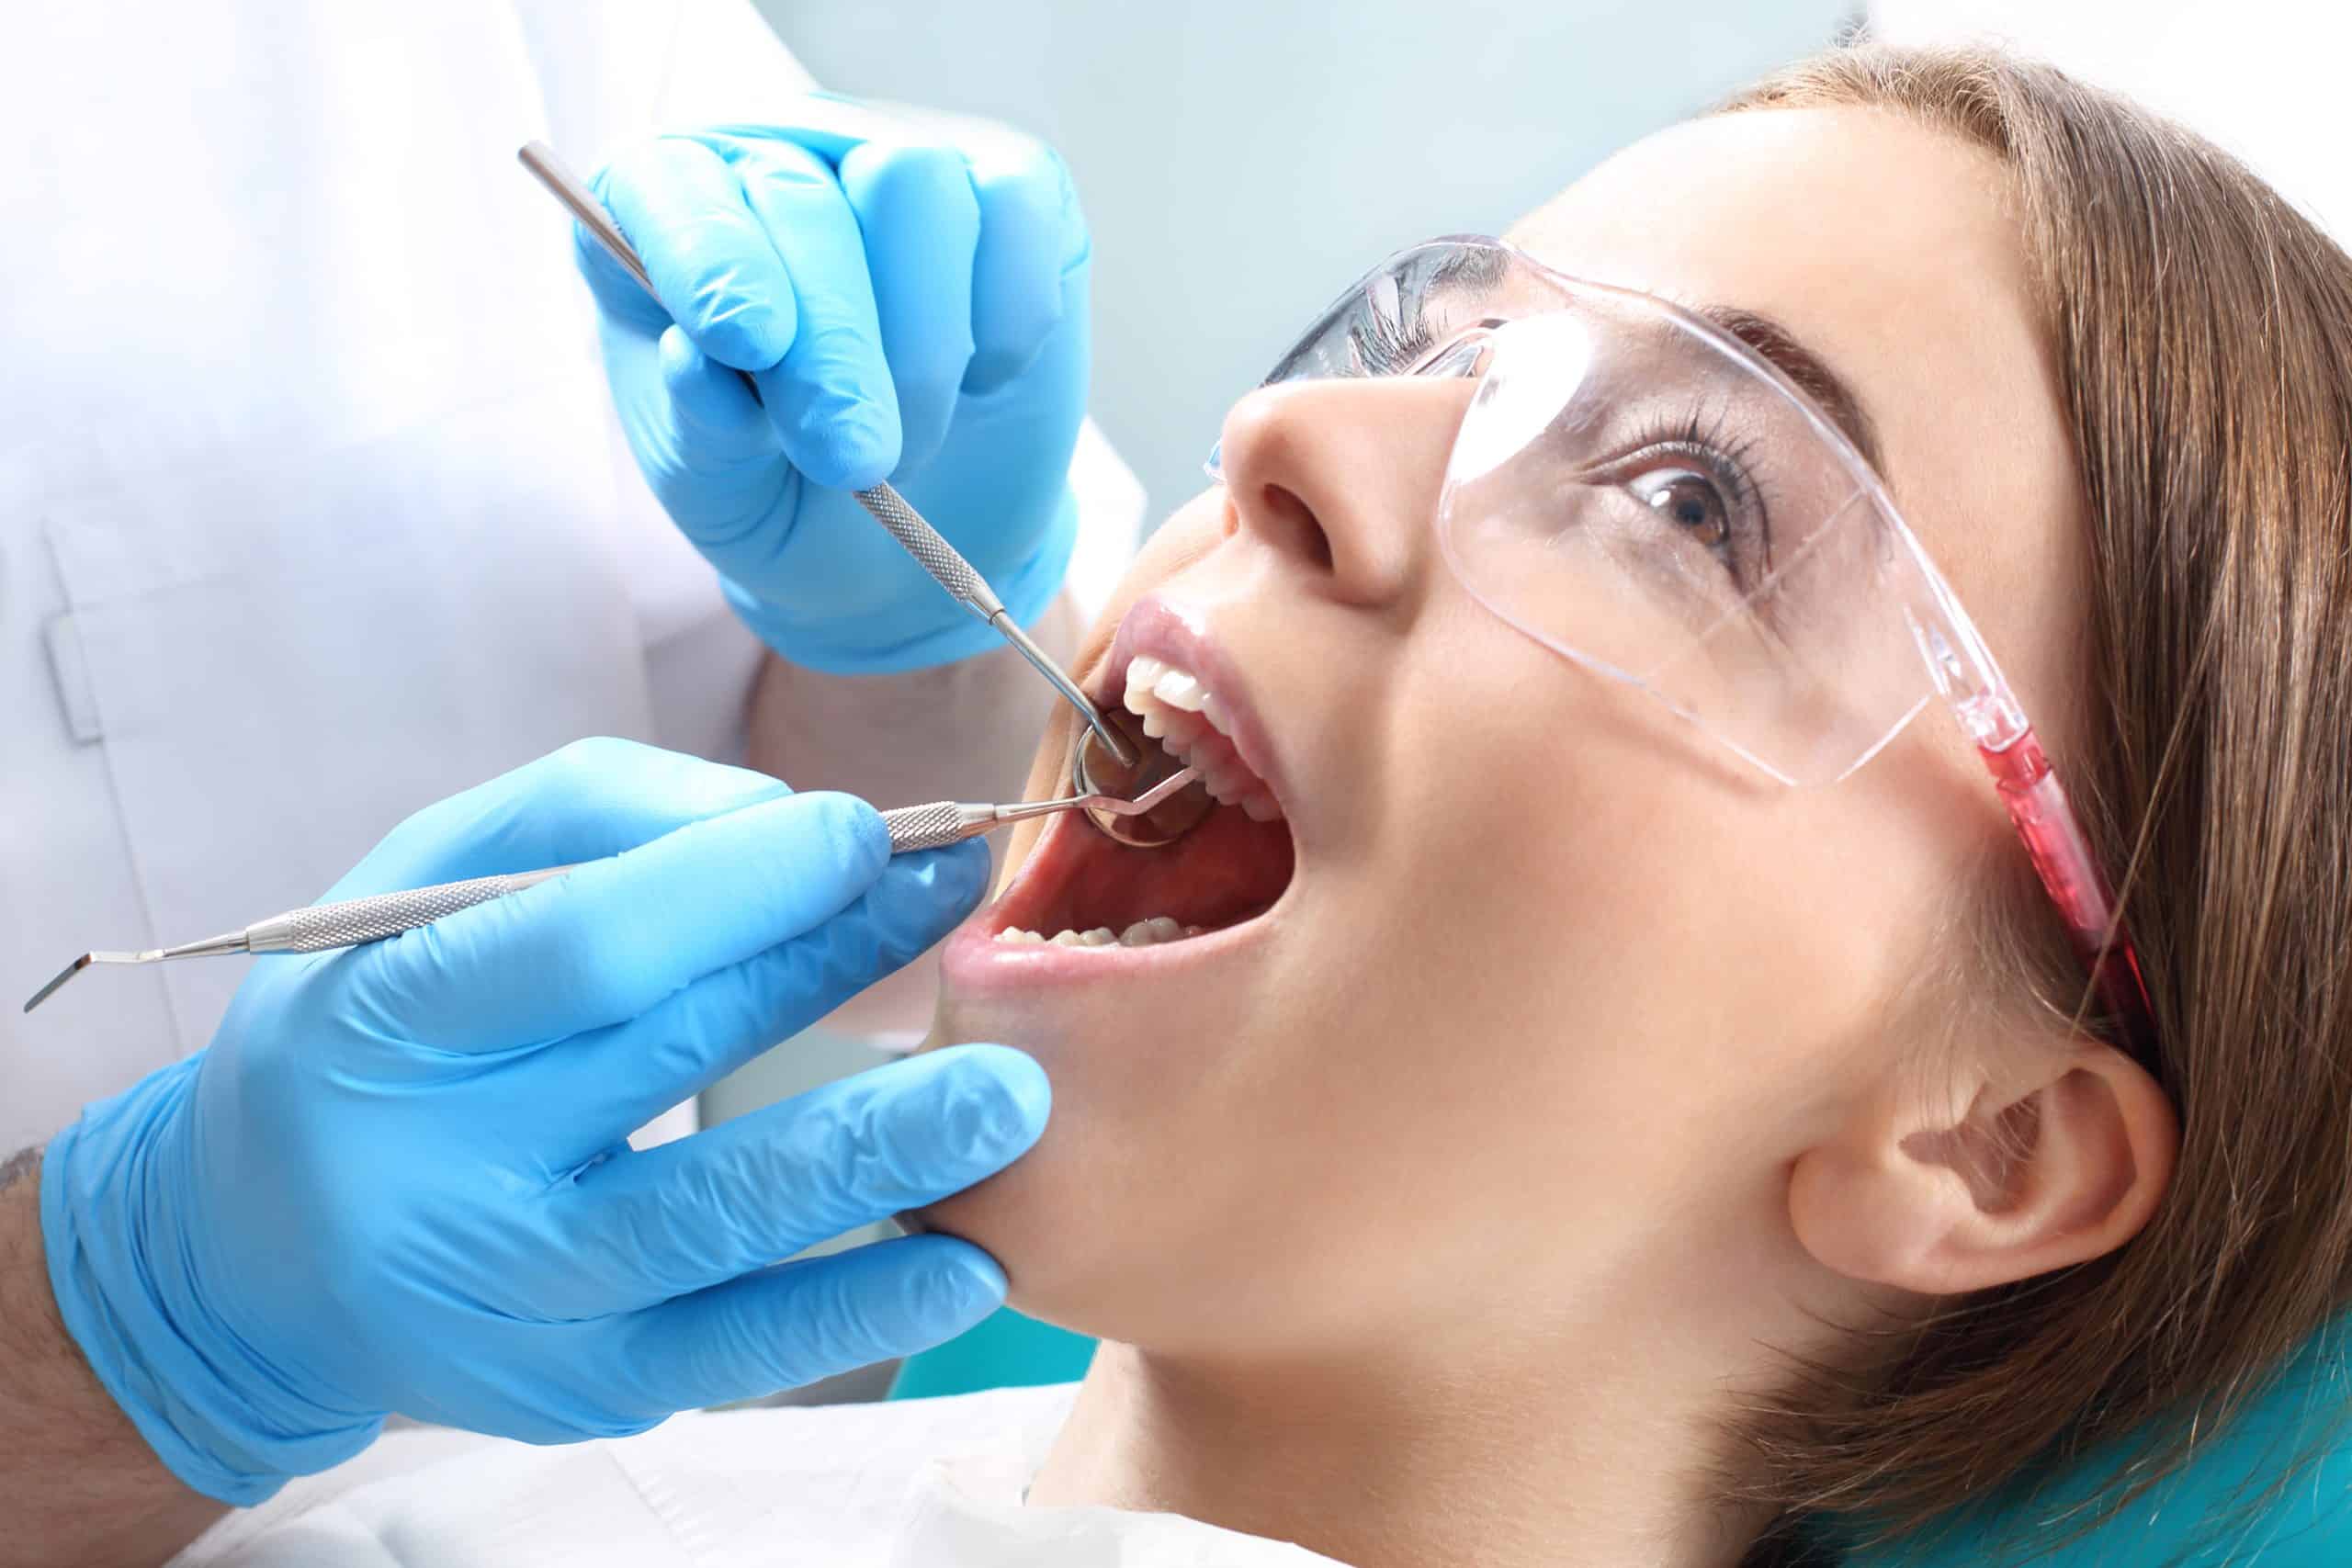 teeth cleaning checkups aurora co Dr. Michael Mingle Dr. Jennifer Rankin Rankin and Mingle Dentistry General, Cosmetic, Restorative, Preventative, Family Dentist in Aurora, CO 80016